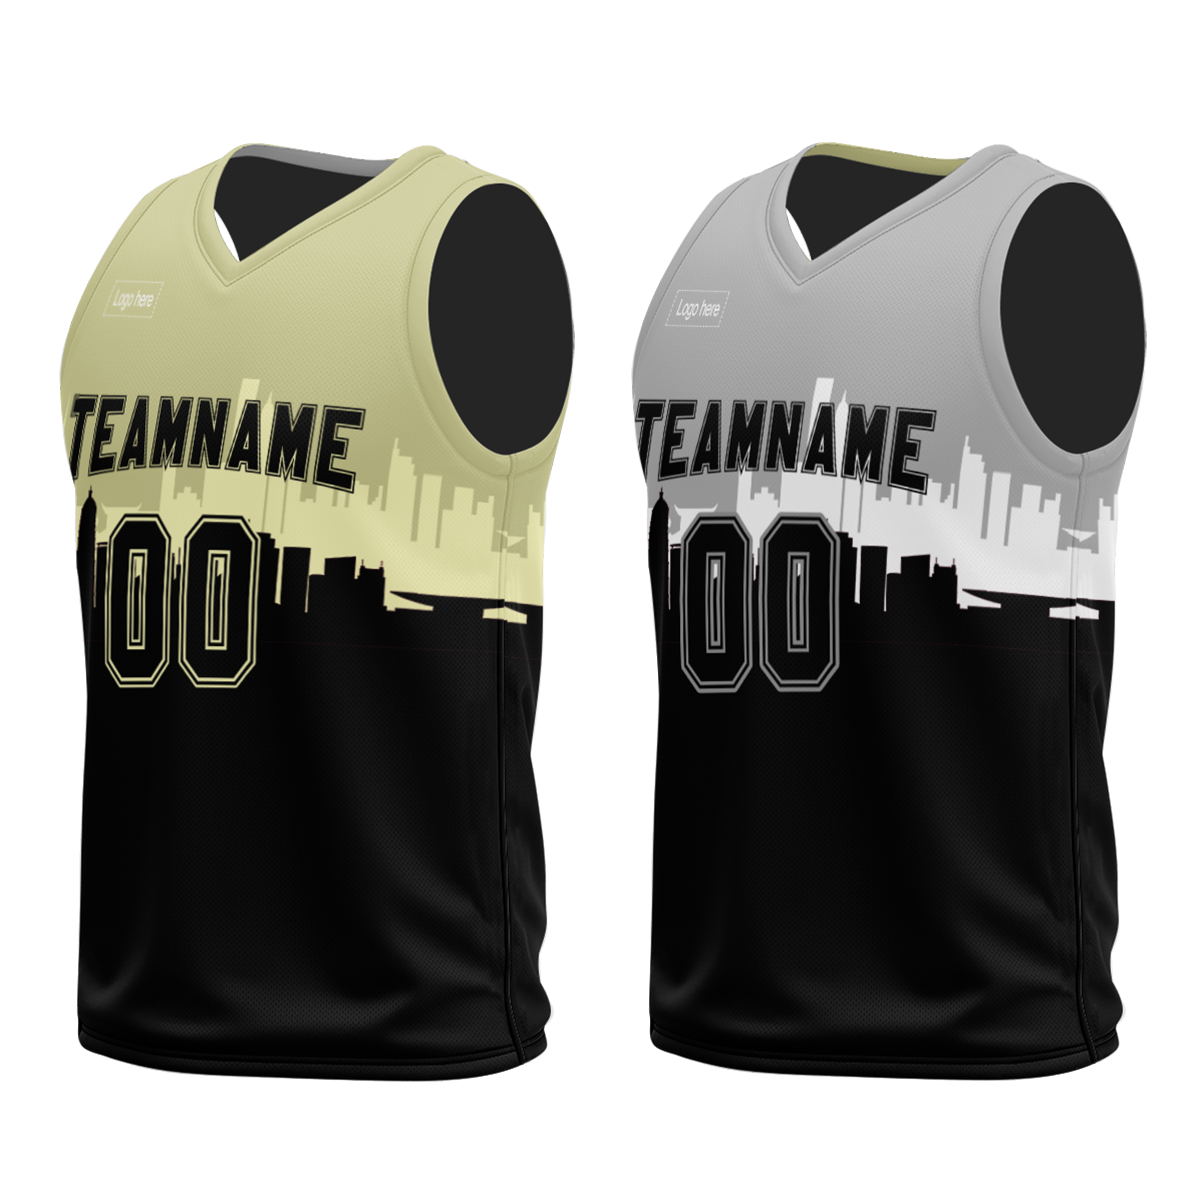 customized-sublimation-printing-basketball-uniforms-design-competitive-basketball-team-jerseys-at-cj-pod-5